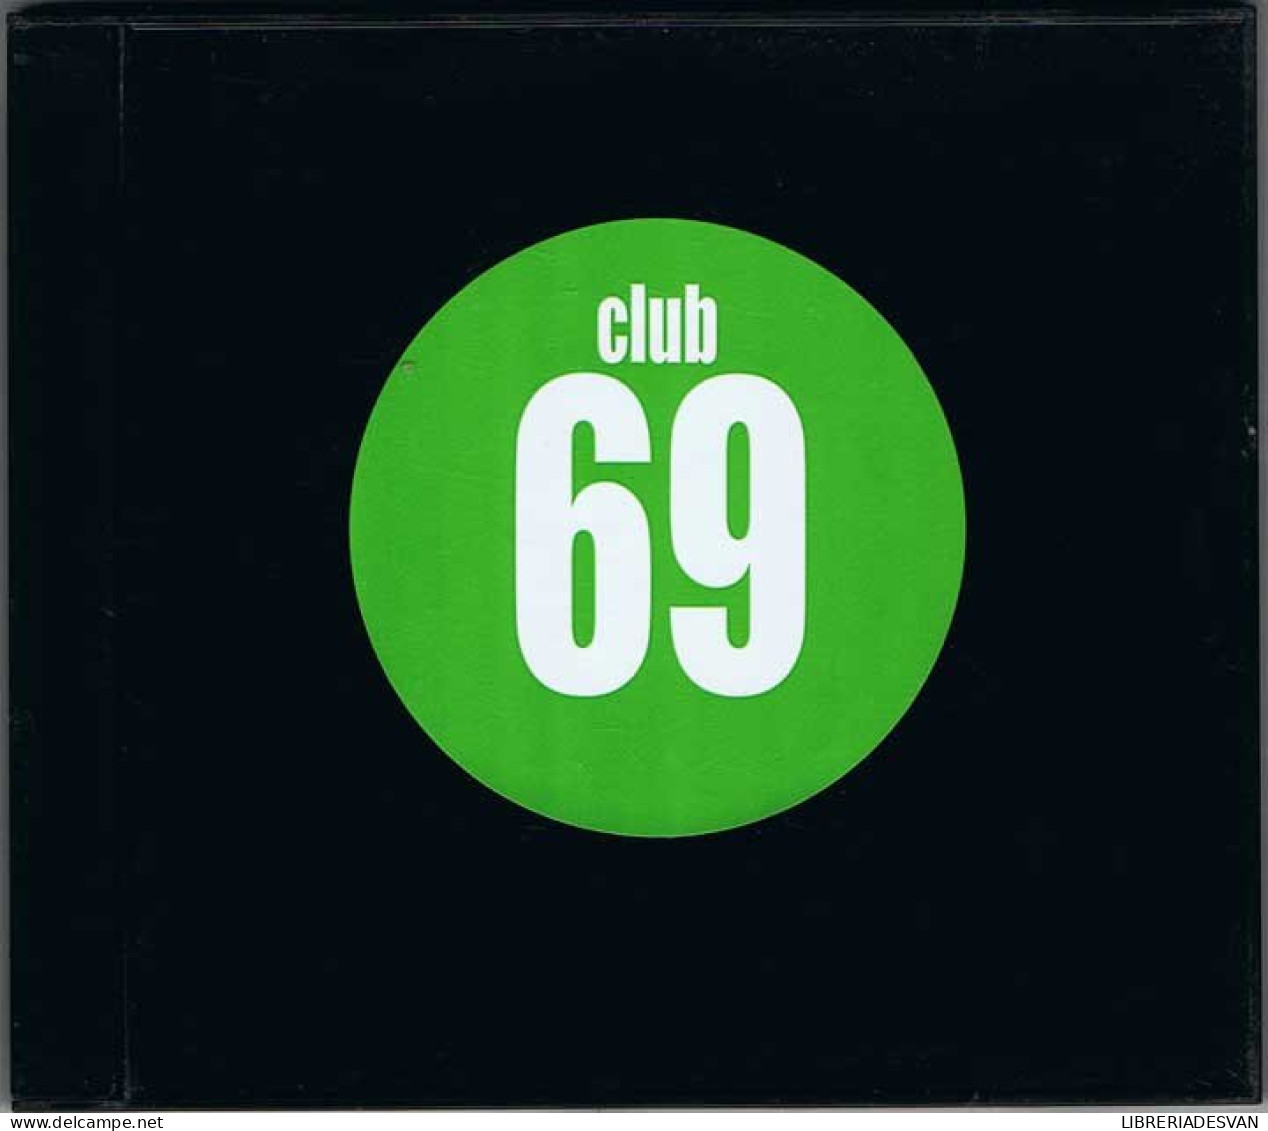 Club 69 - Dance, Techno & House